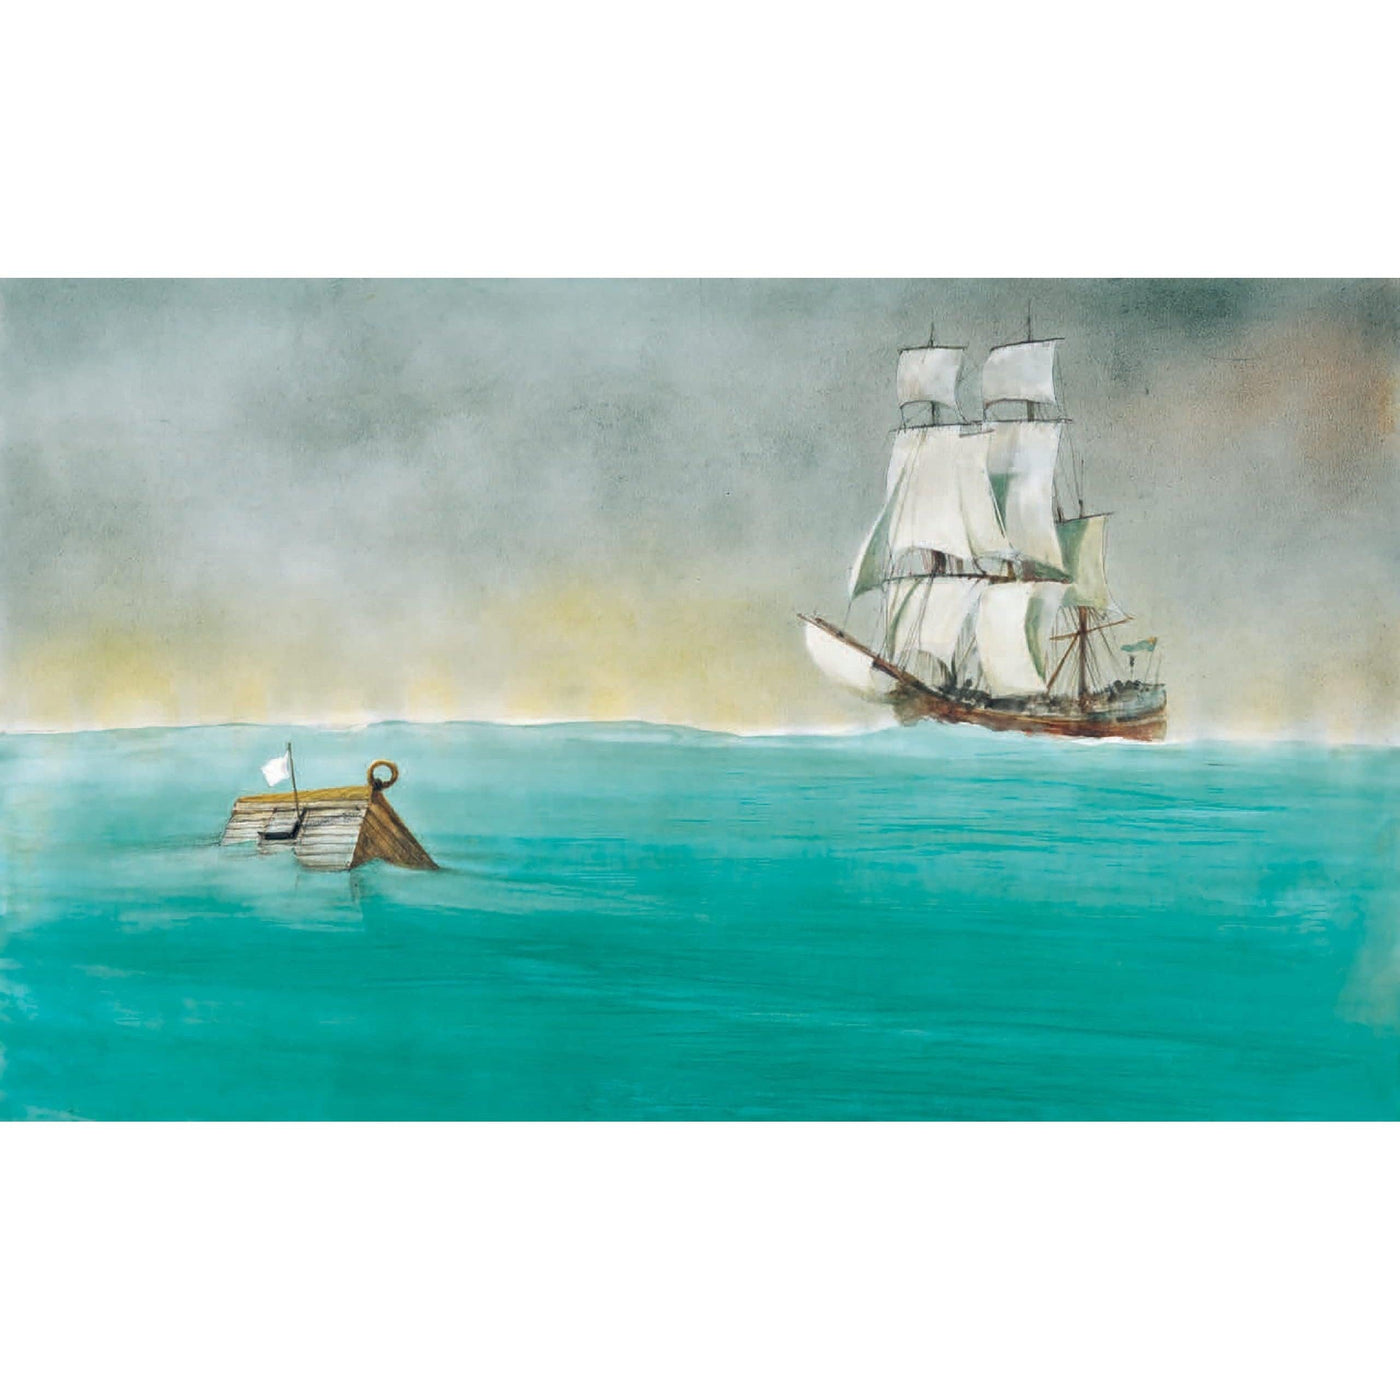 Gulliver's Travels: A Robert Ingpen Illustrated Classic (Ingpen Classics) - Jonathan Swift & Robert Ingpen